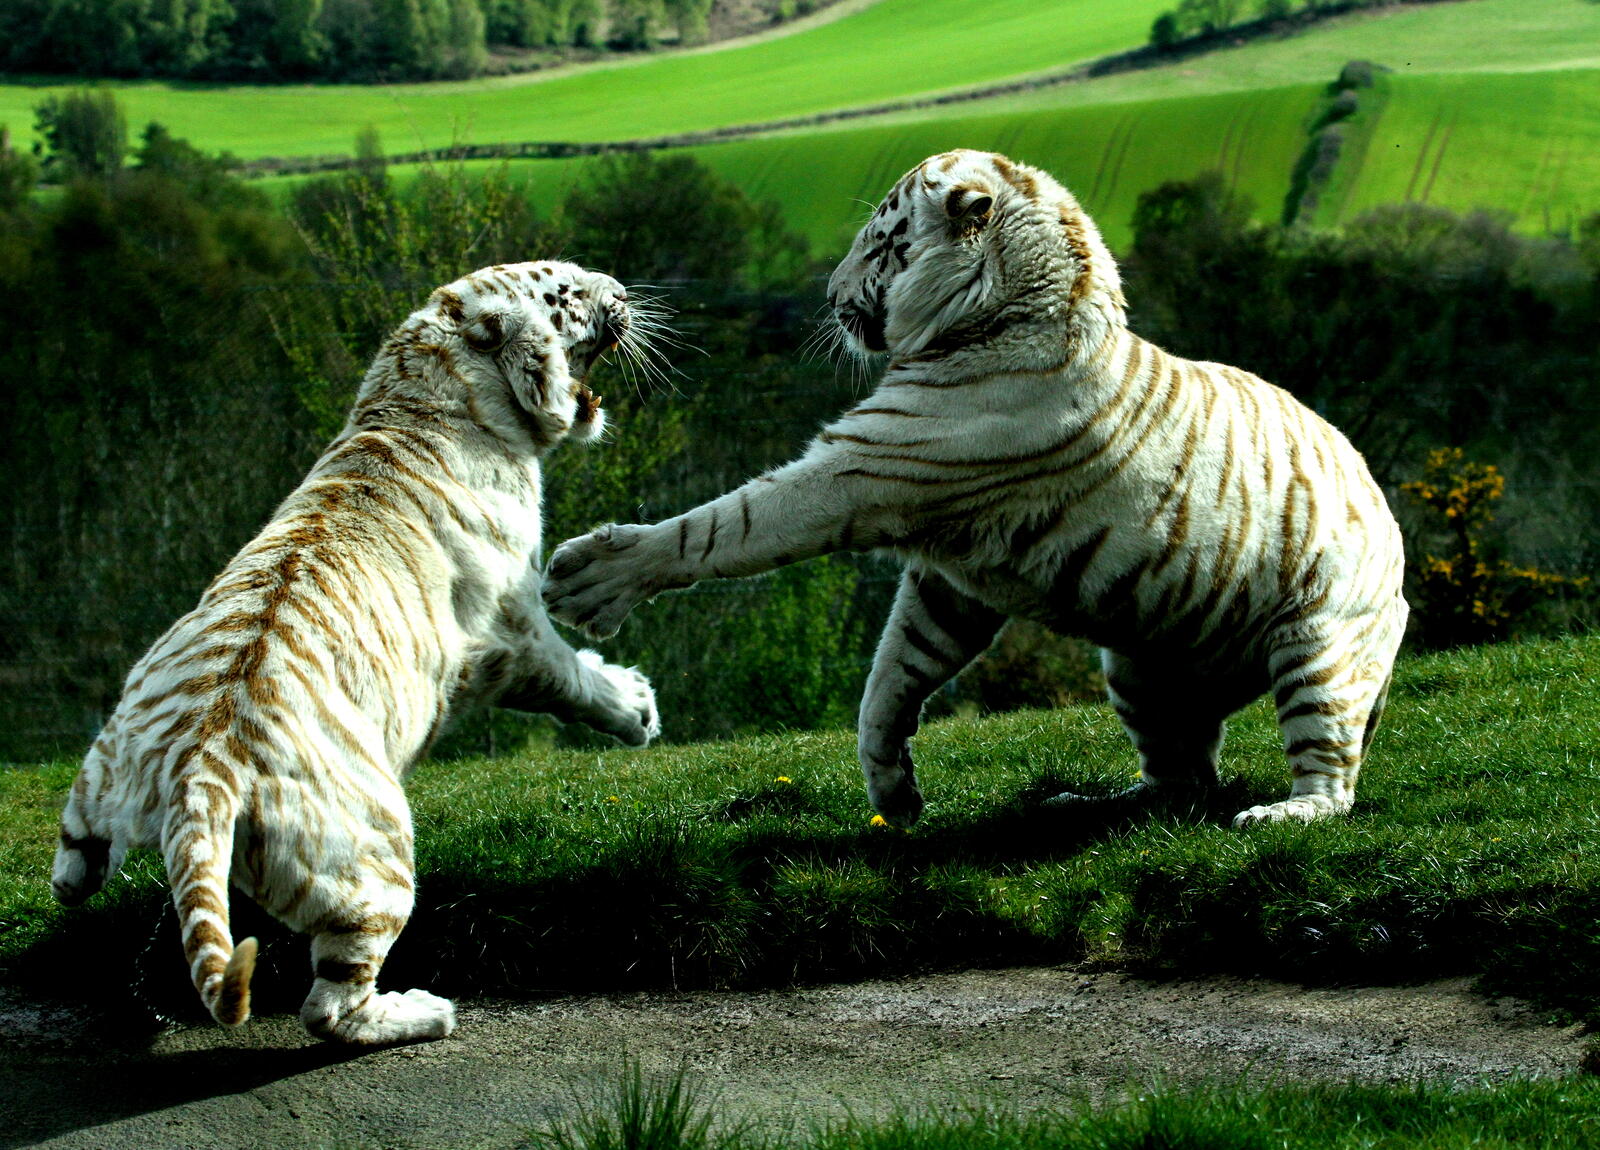 Wallpapers the battle white tiger predator on the desktop